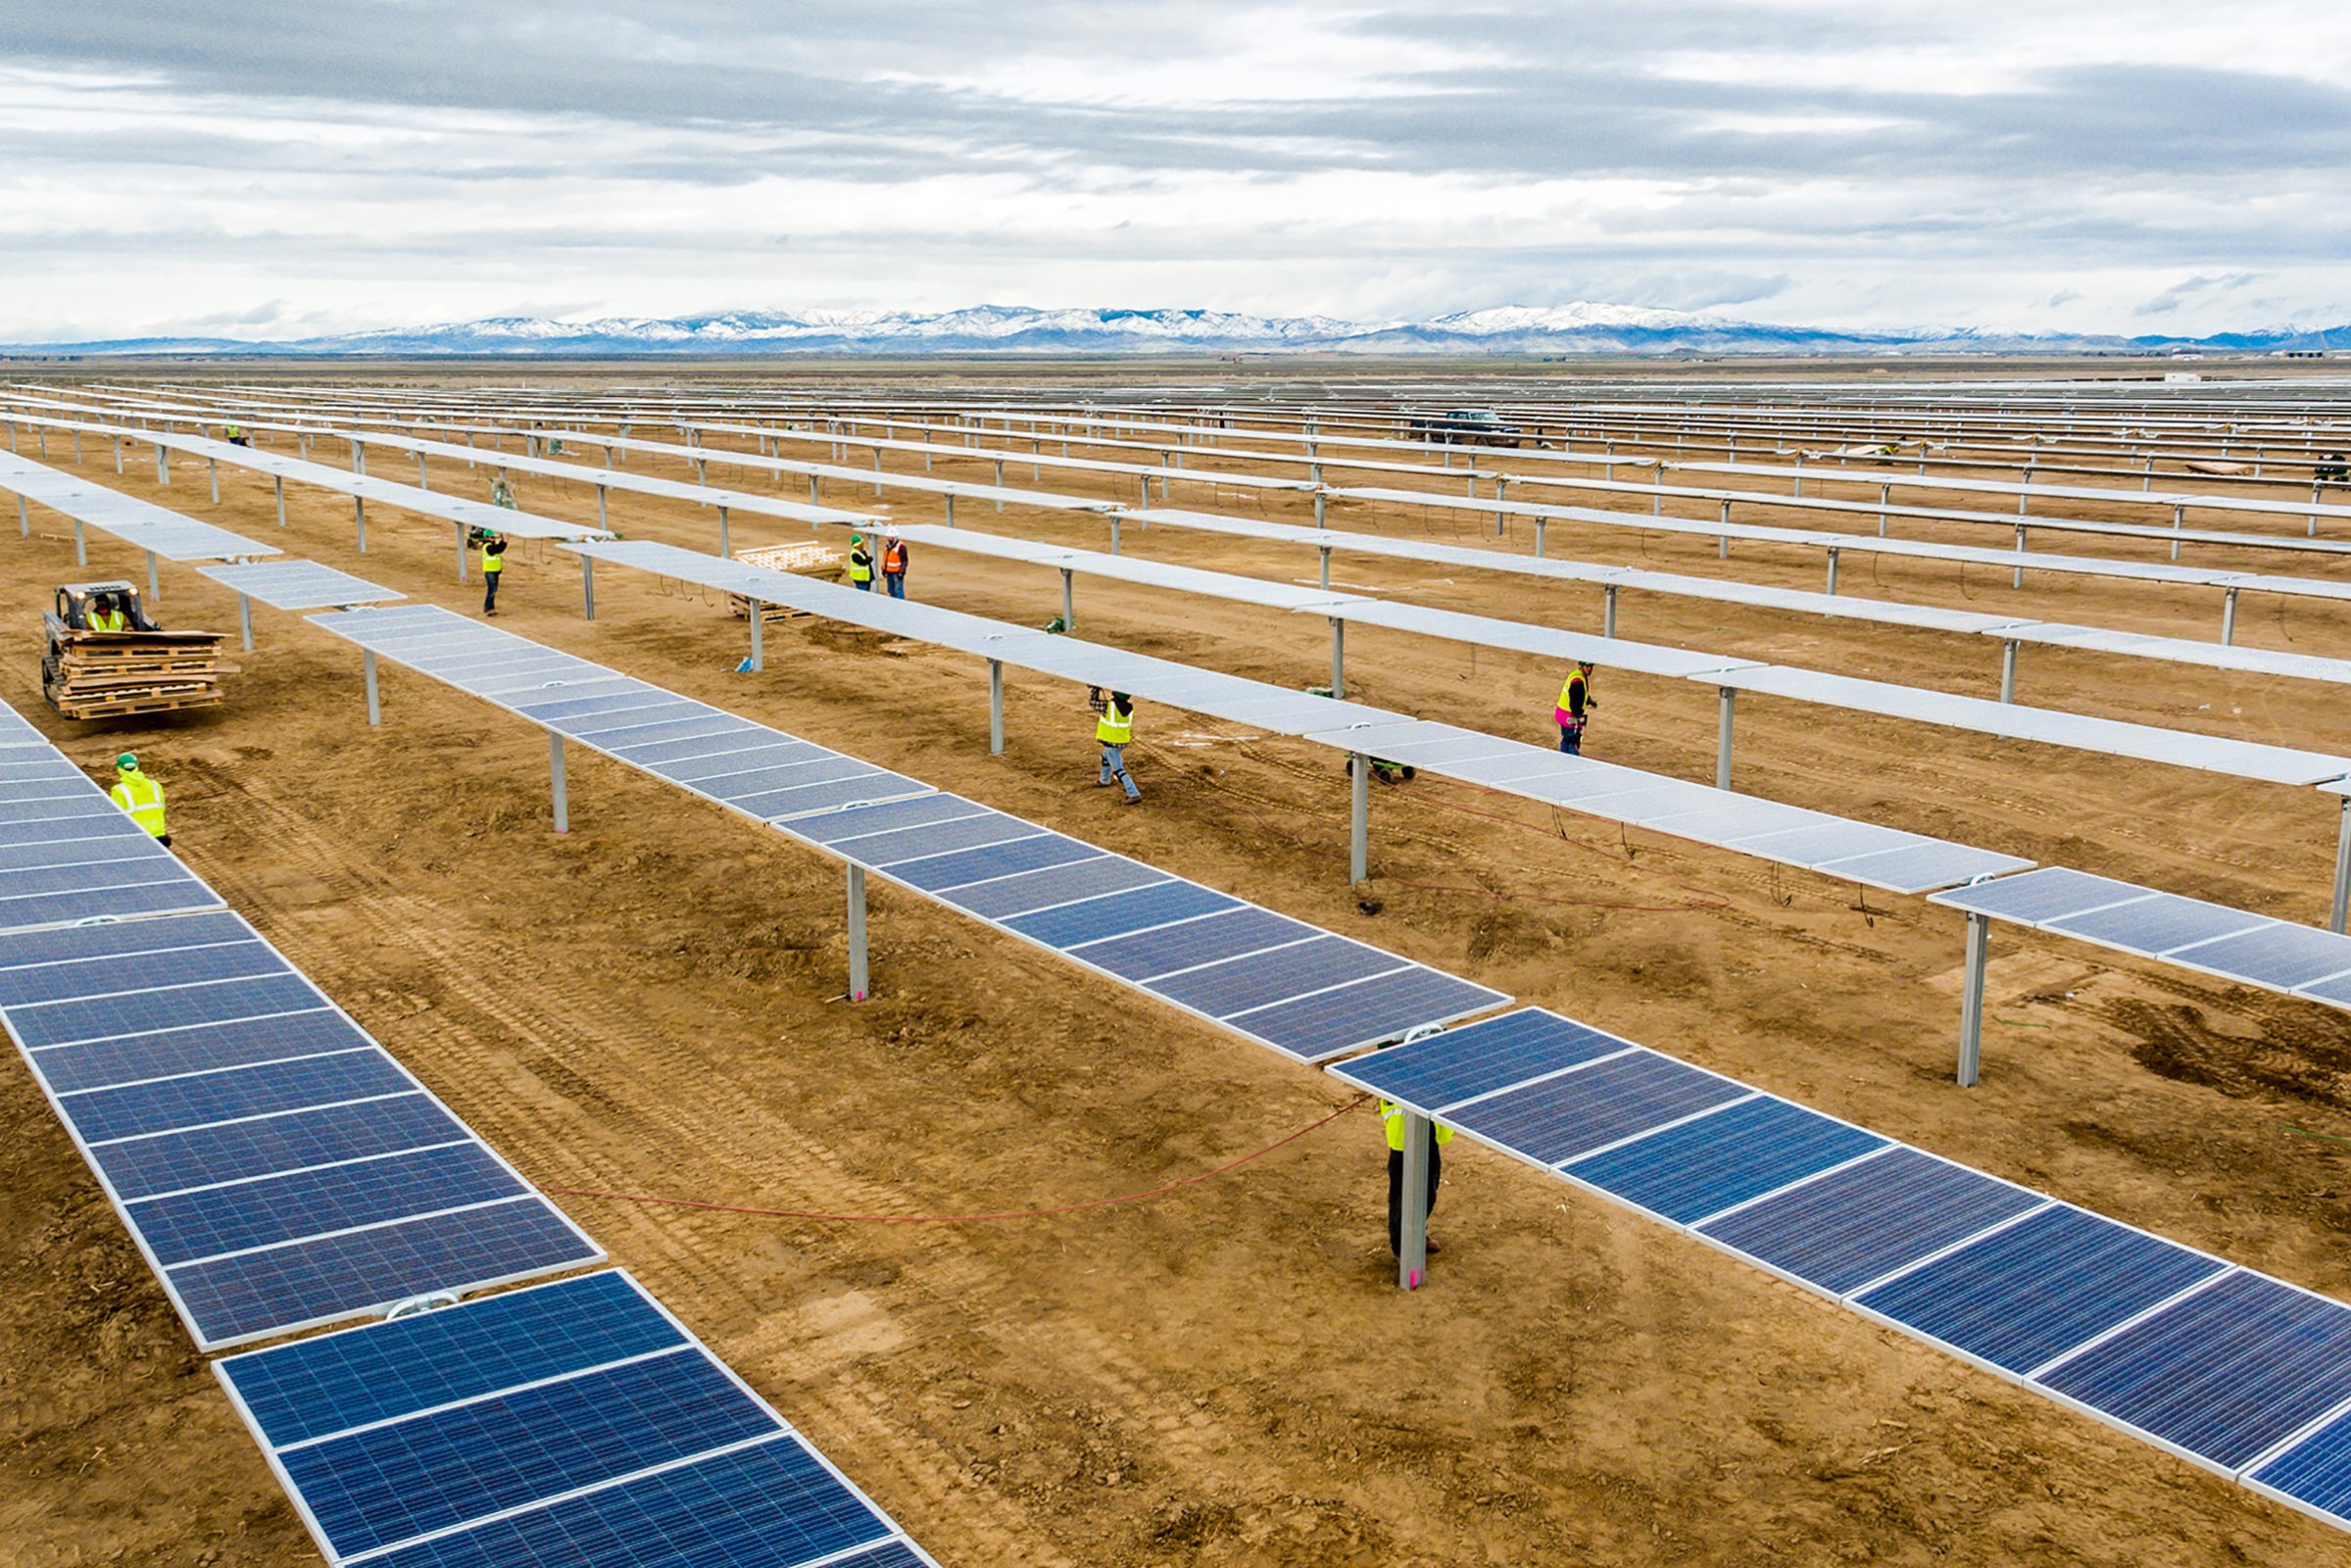 Construction crews assemble solar modules for a 55-megawatt power plant in Idaho built by DEPCOM